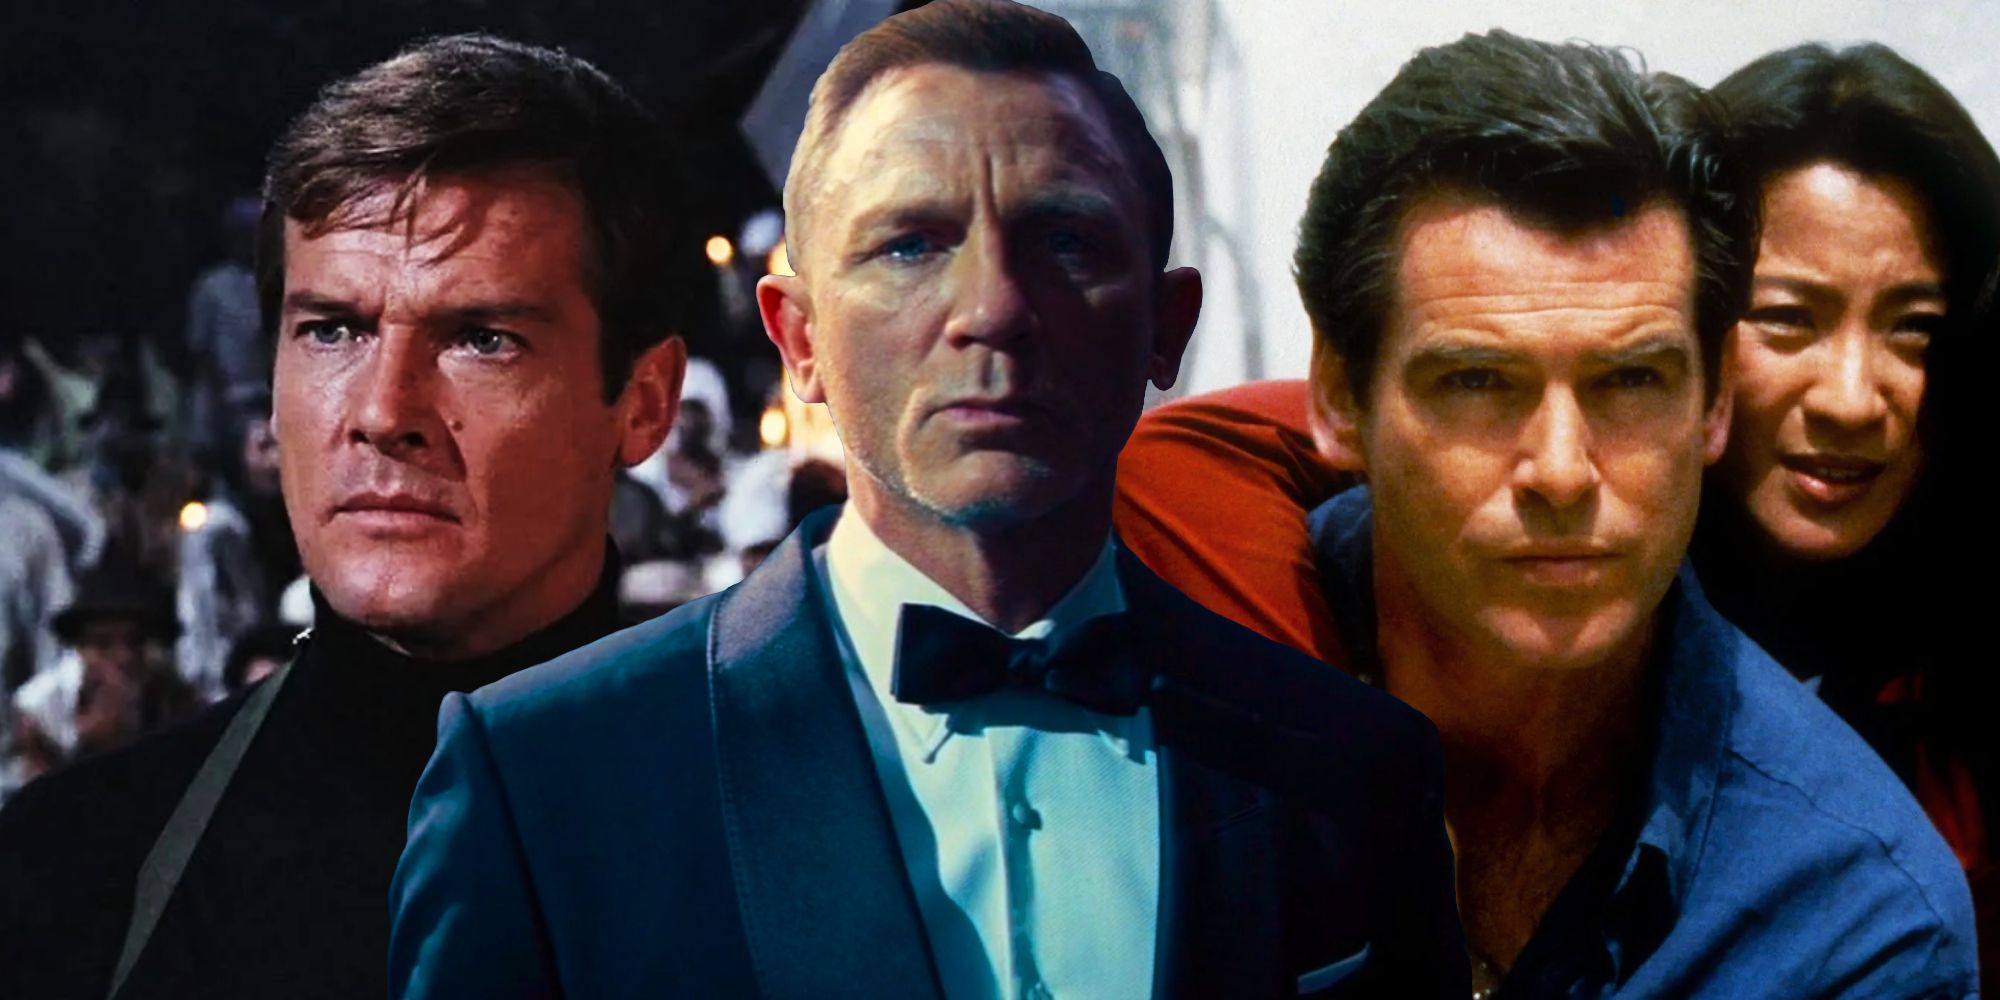 Daniel Craig, Pierce Brosnan, and Roger Moore as James Bond